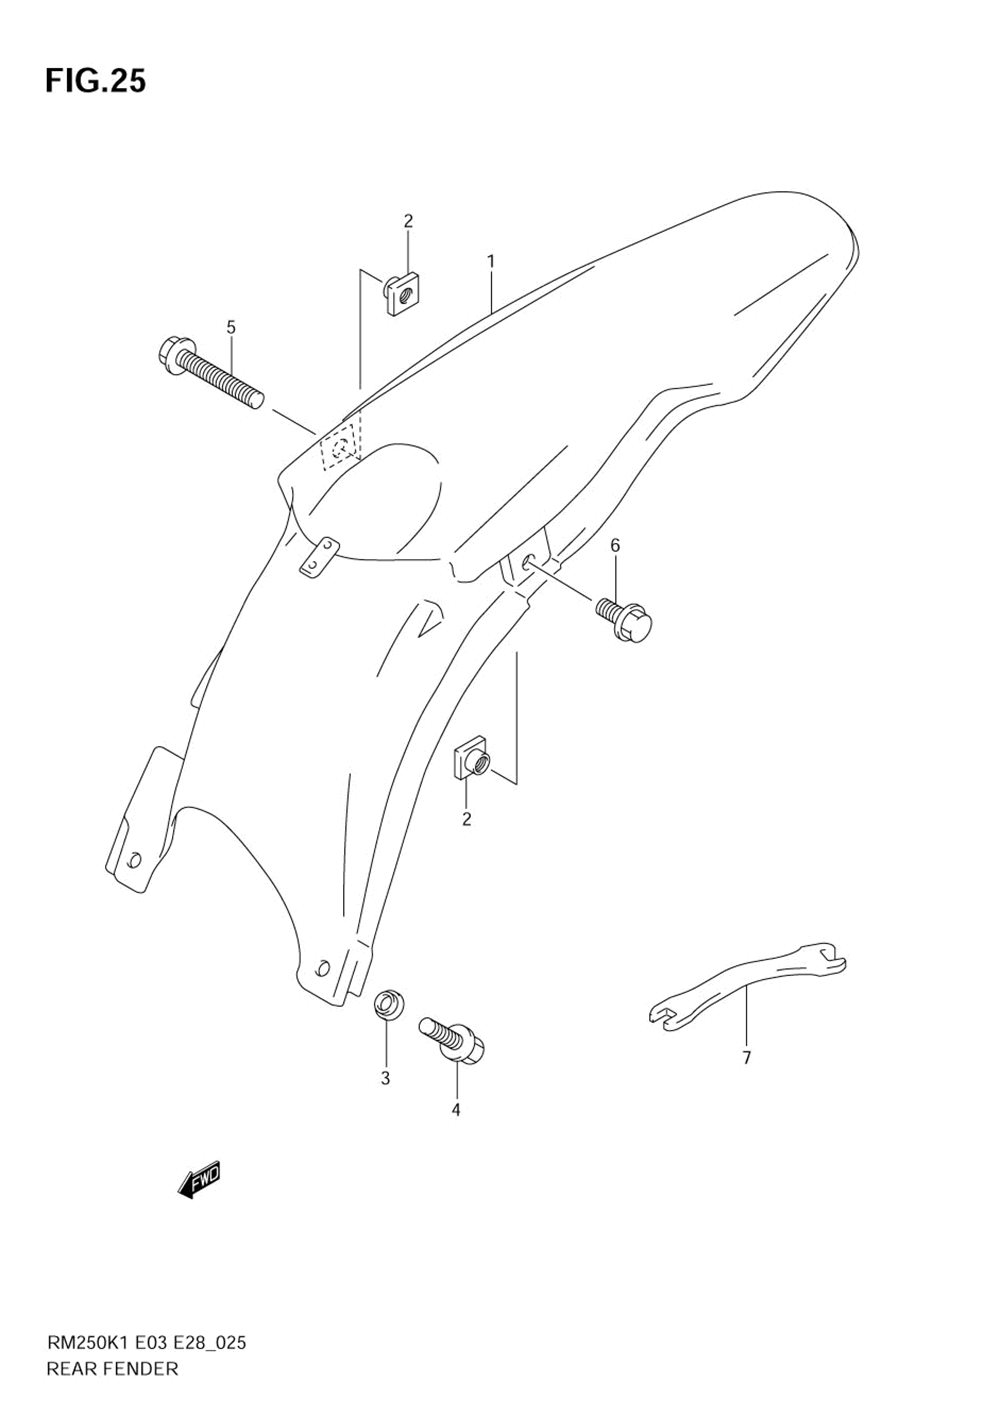 Rear fender (model k1)